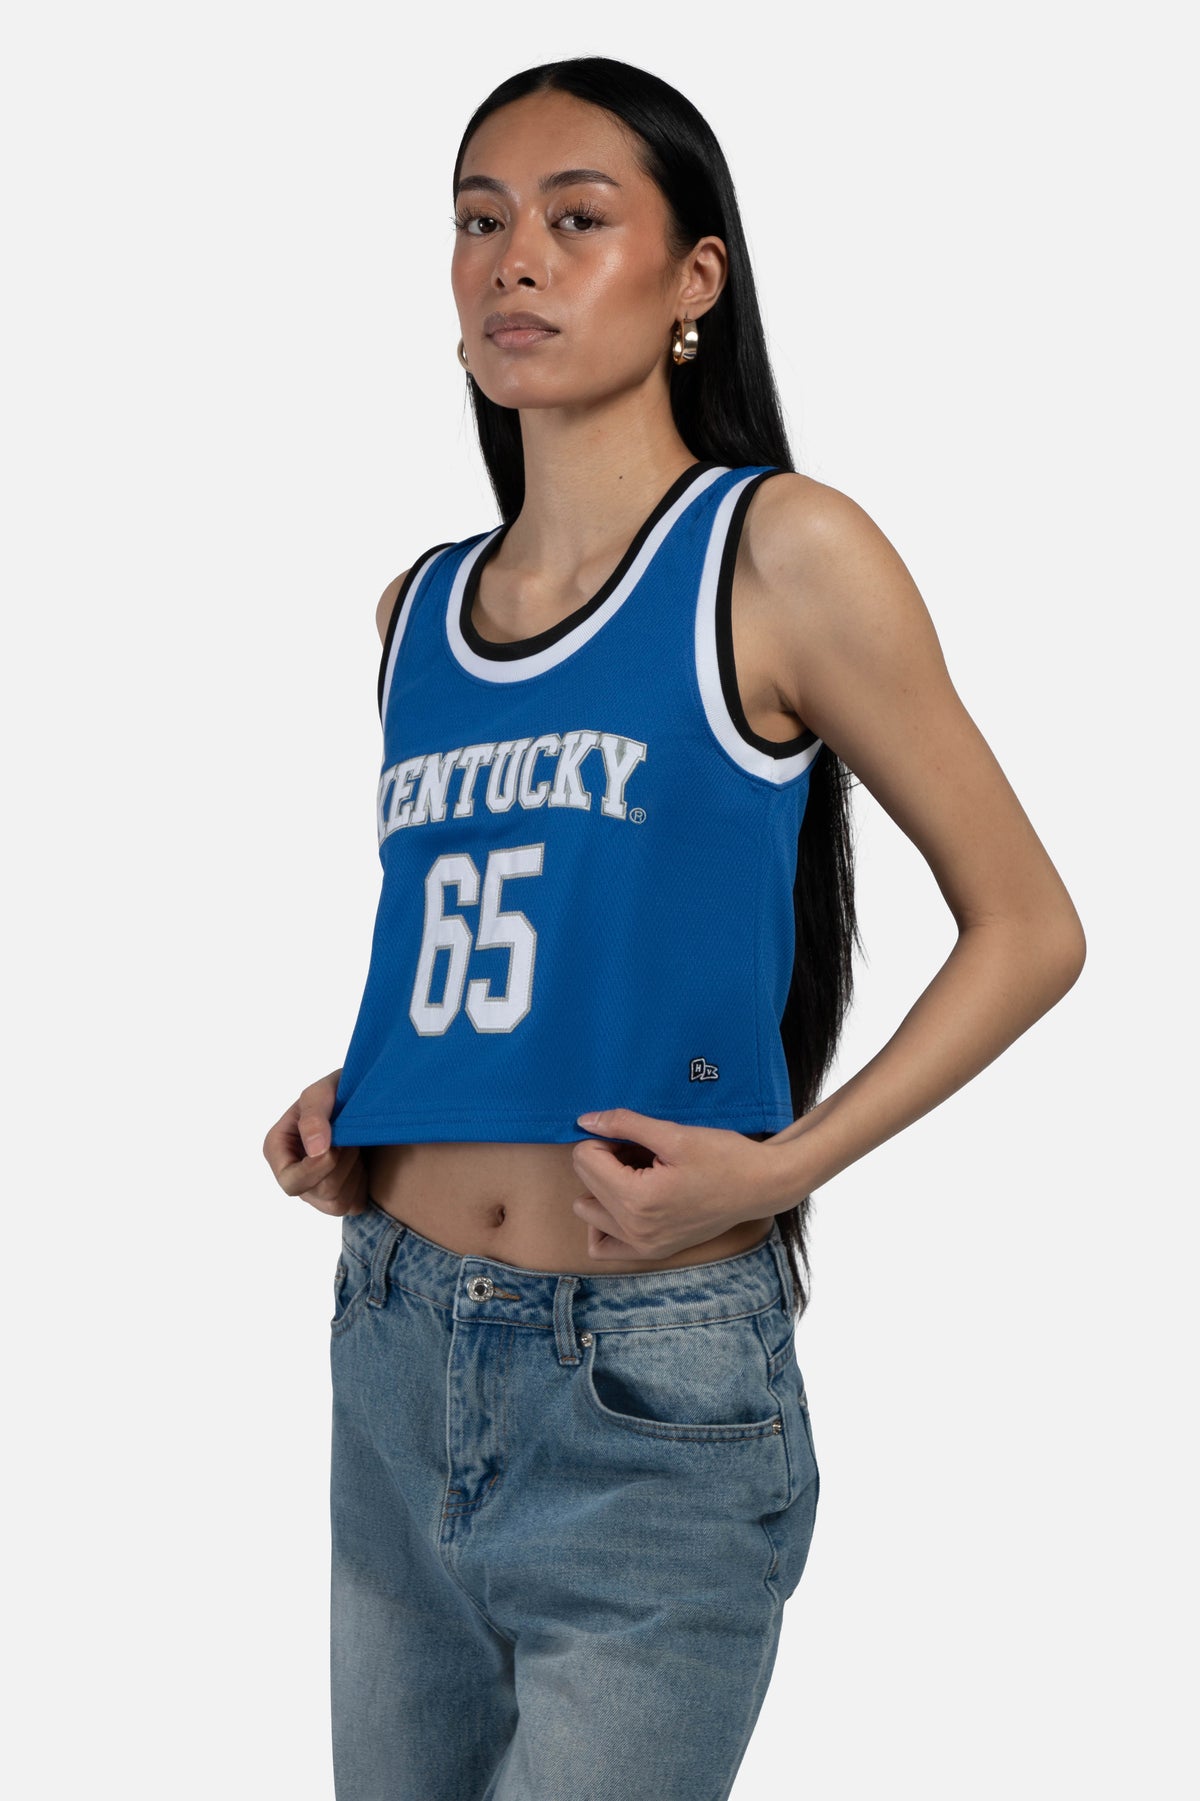 University of Kentucky Basketball Top